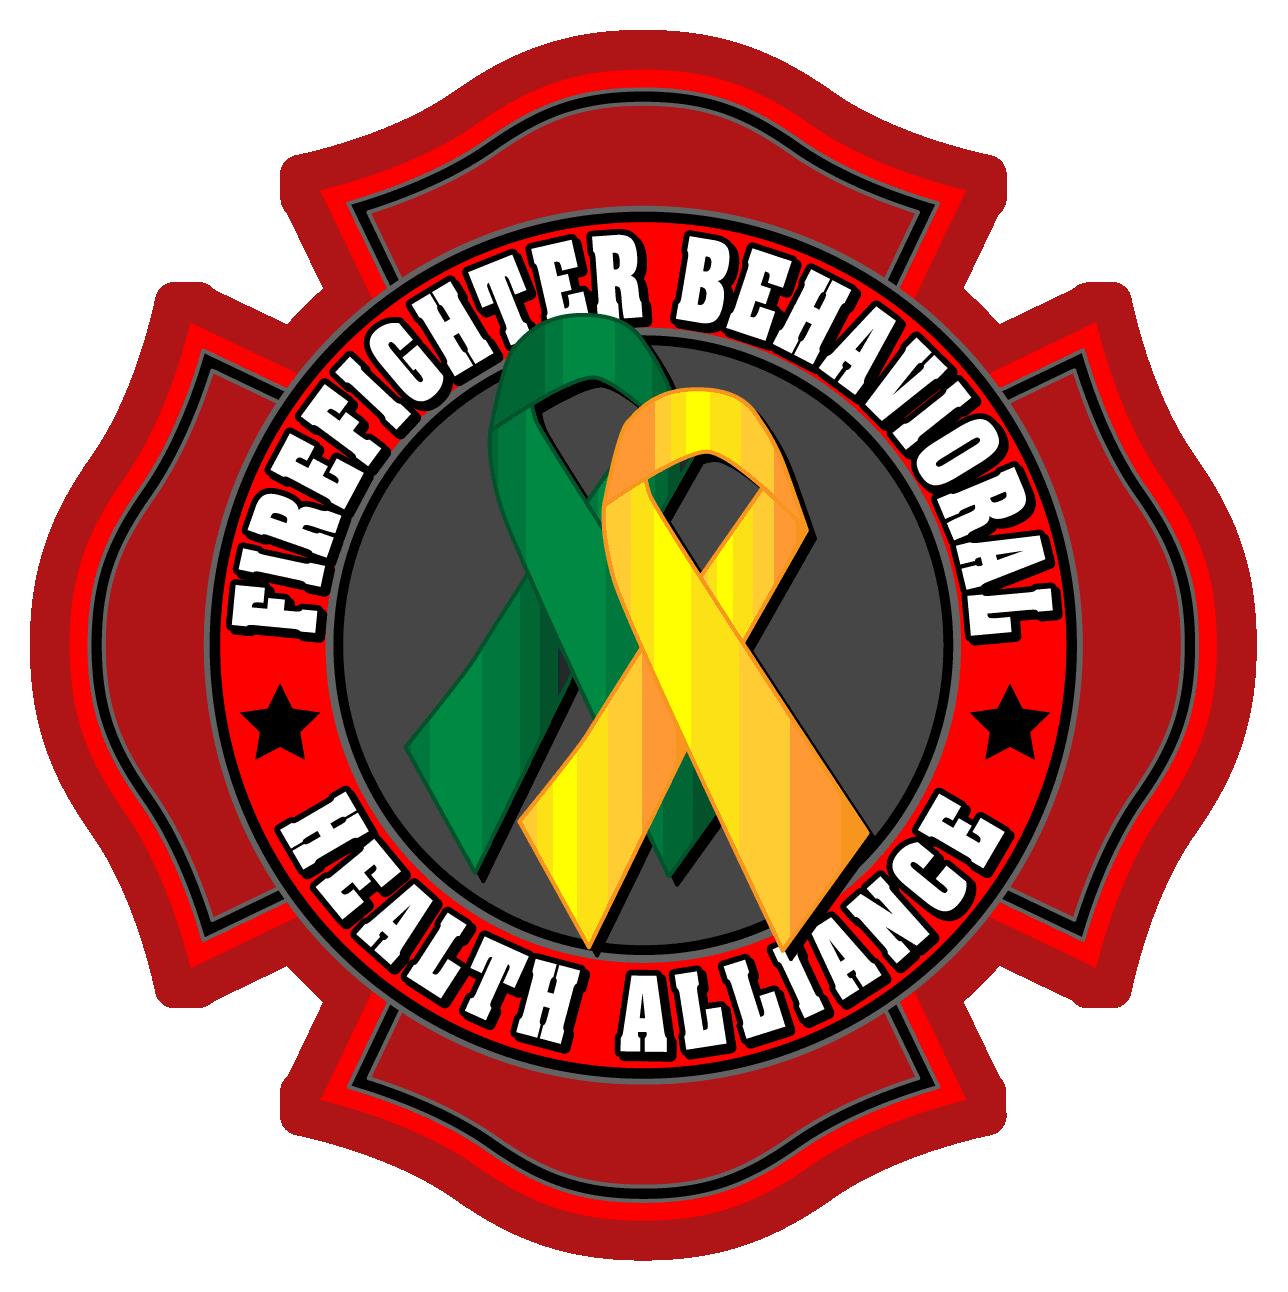 Firefighter Behavioral Health Alliance National Volunteer Fire Council